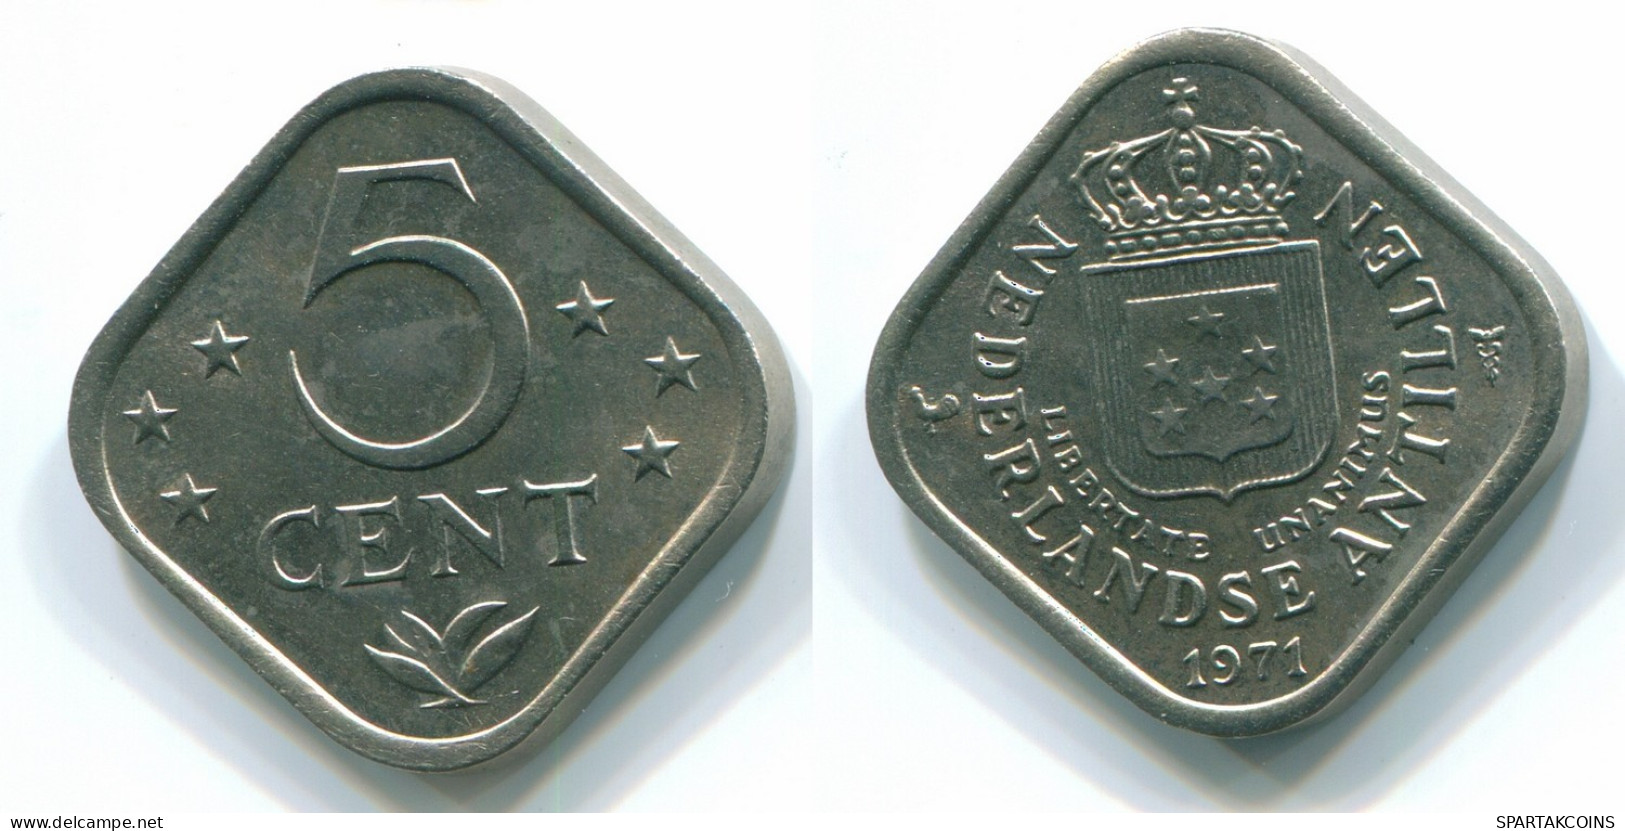 5 CENTS 1971 NIEDERLÄNDISCHE ANTILLEN Nickel Koloniale Münze #S12182.D.A - Netherlands Antilles